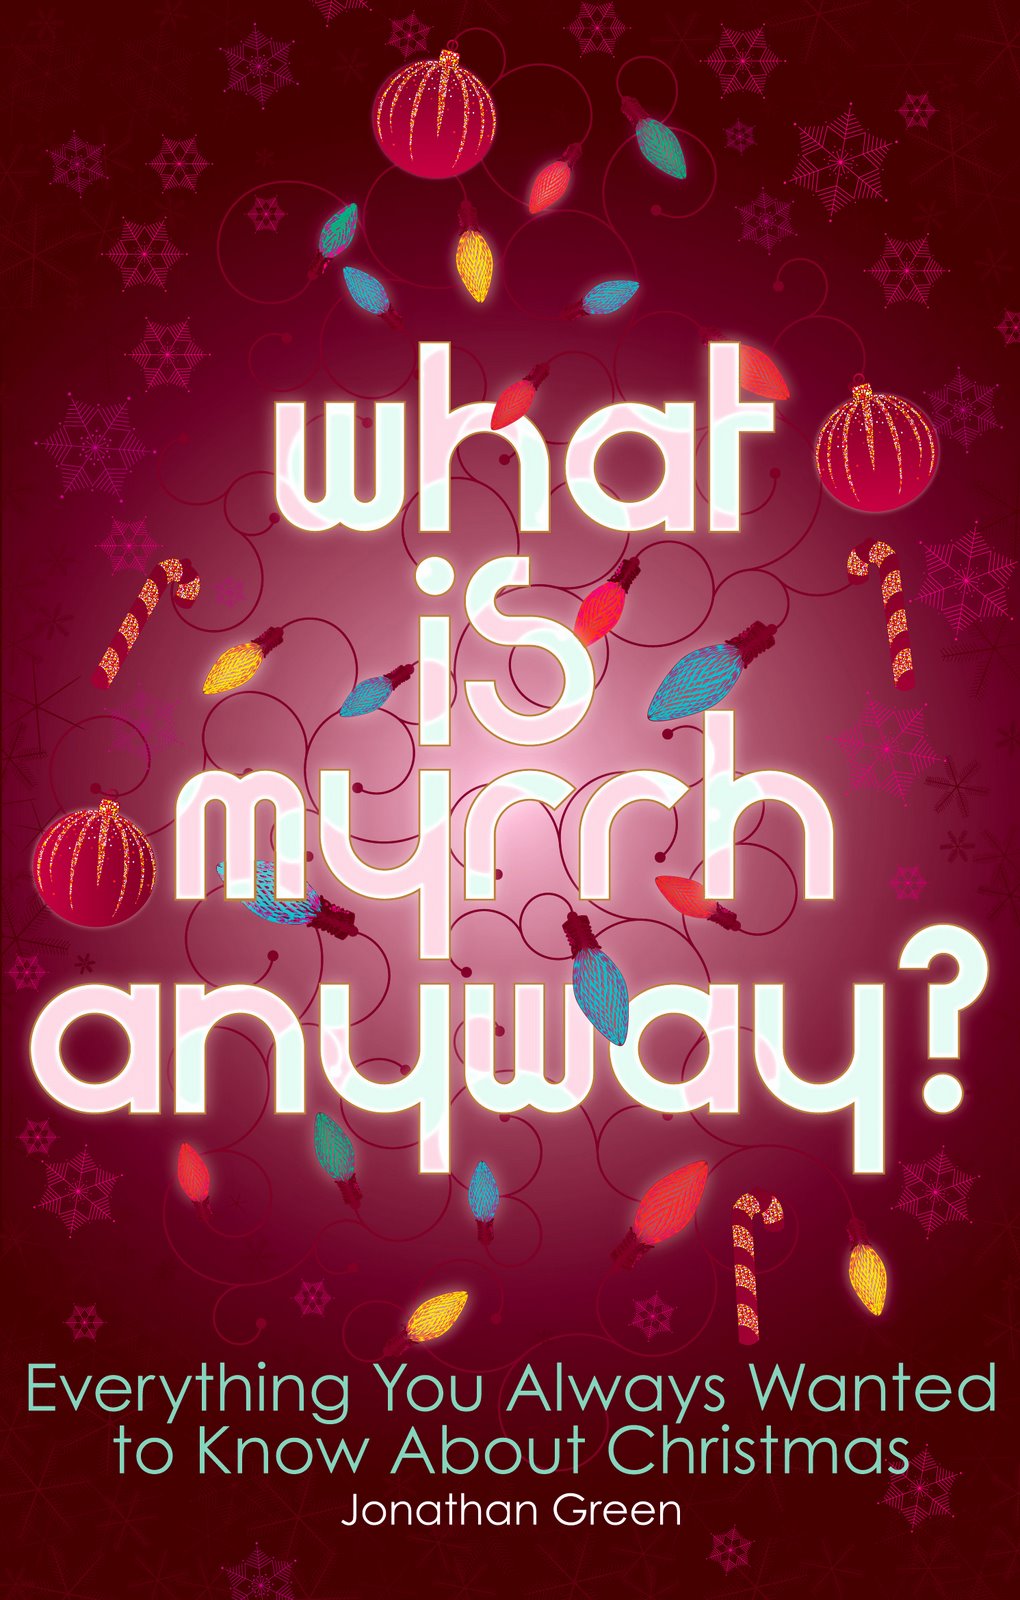 [What_is_Myrrh_Anyway.jpg]